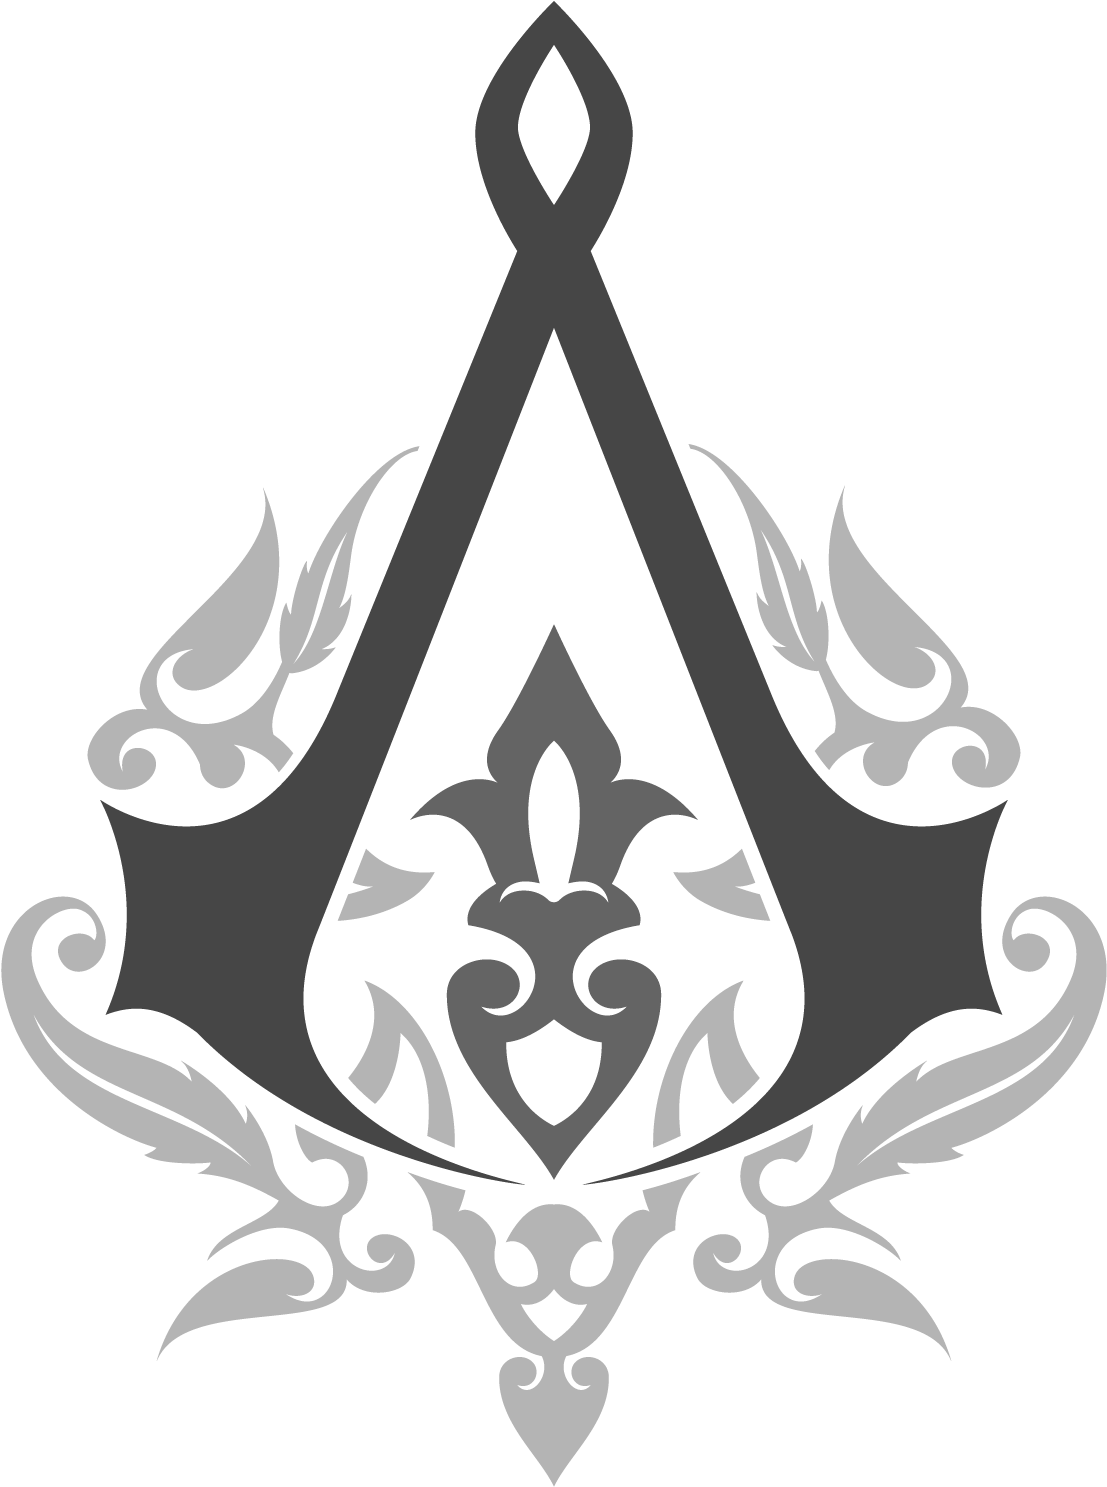 Assassin's Creed Revelations - Assassins Creed Future Logo (1200x1800)